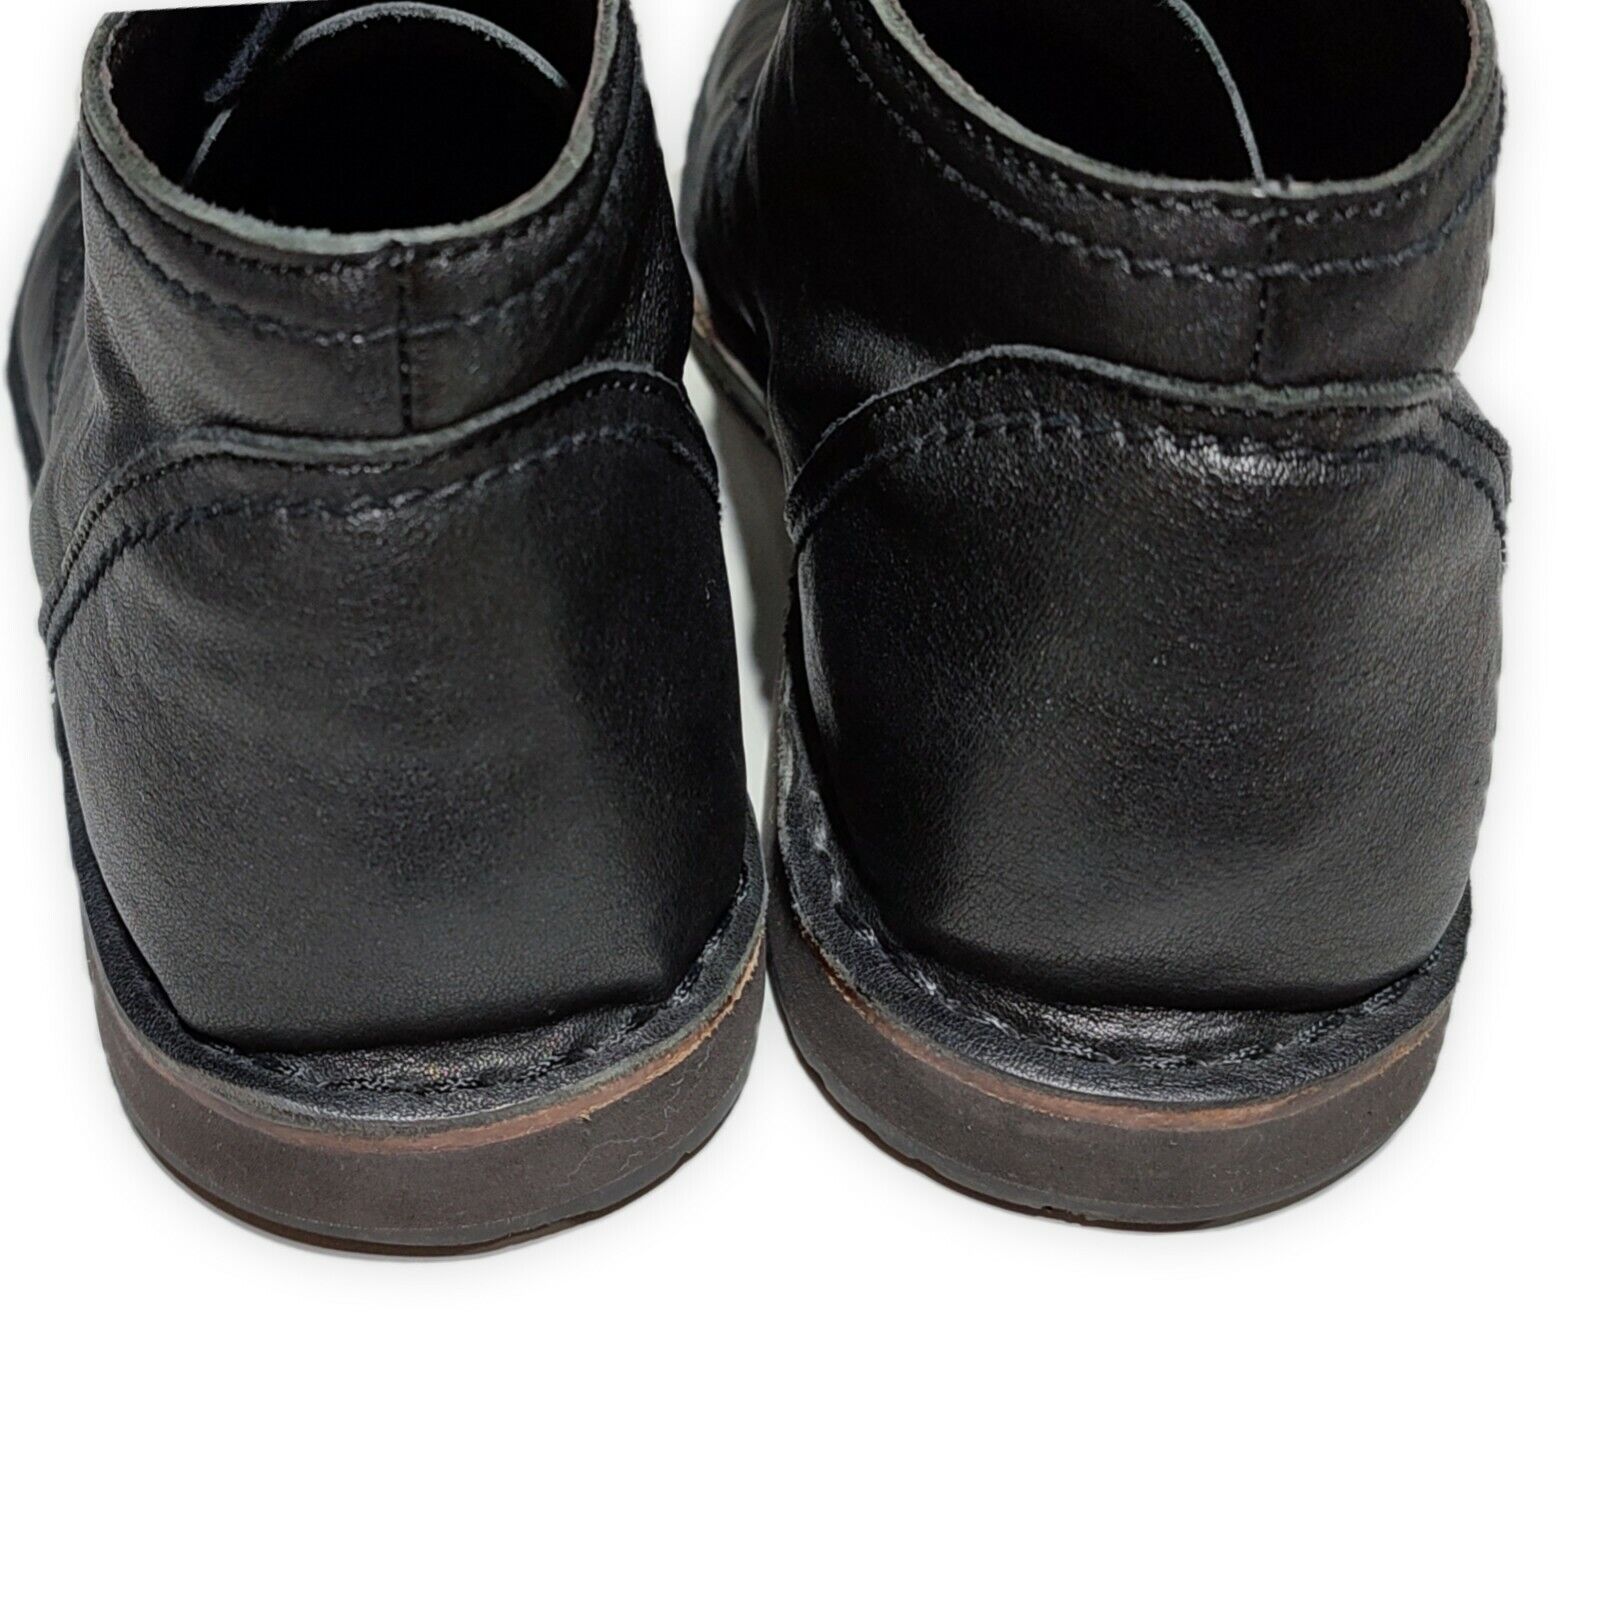 John Varvatos Men's Casual Leather Shoes Size 10M - image 4